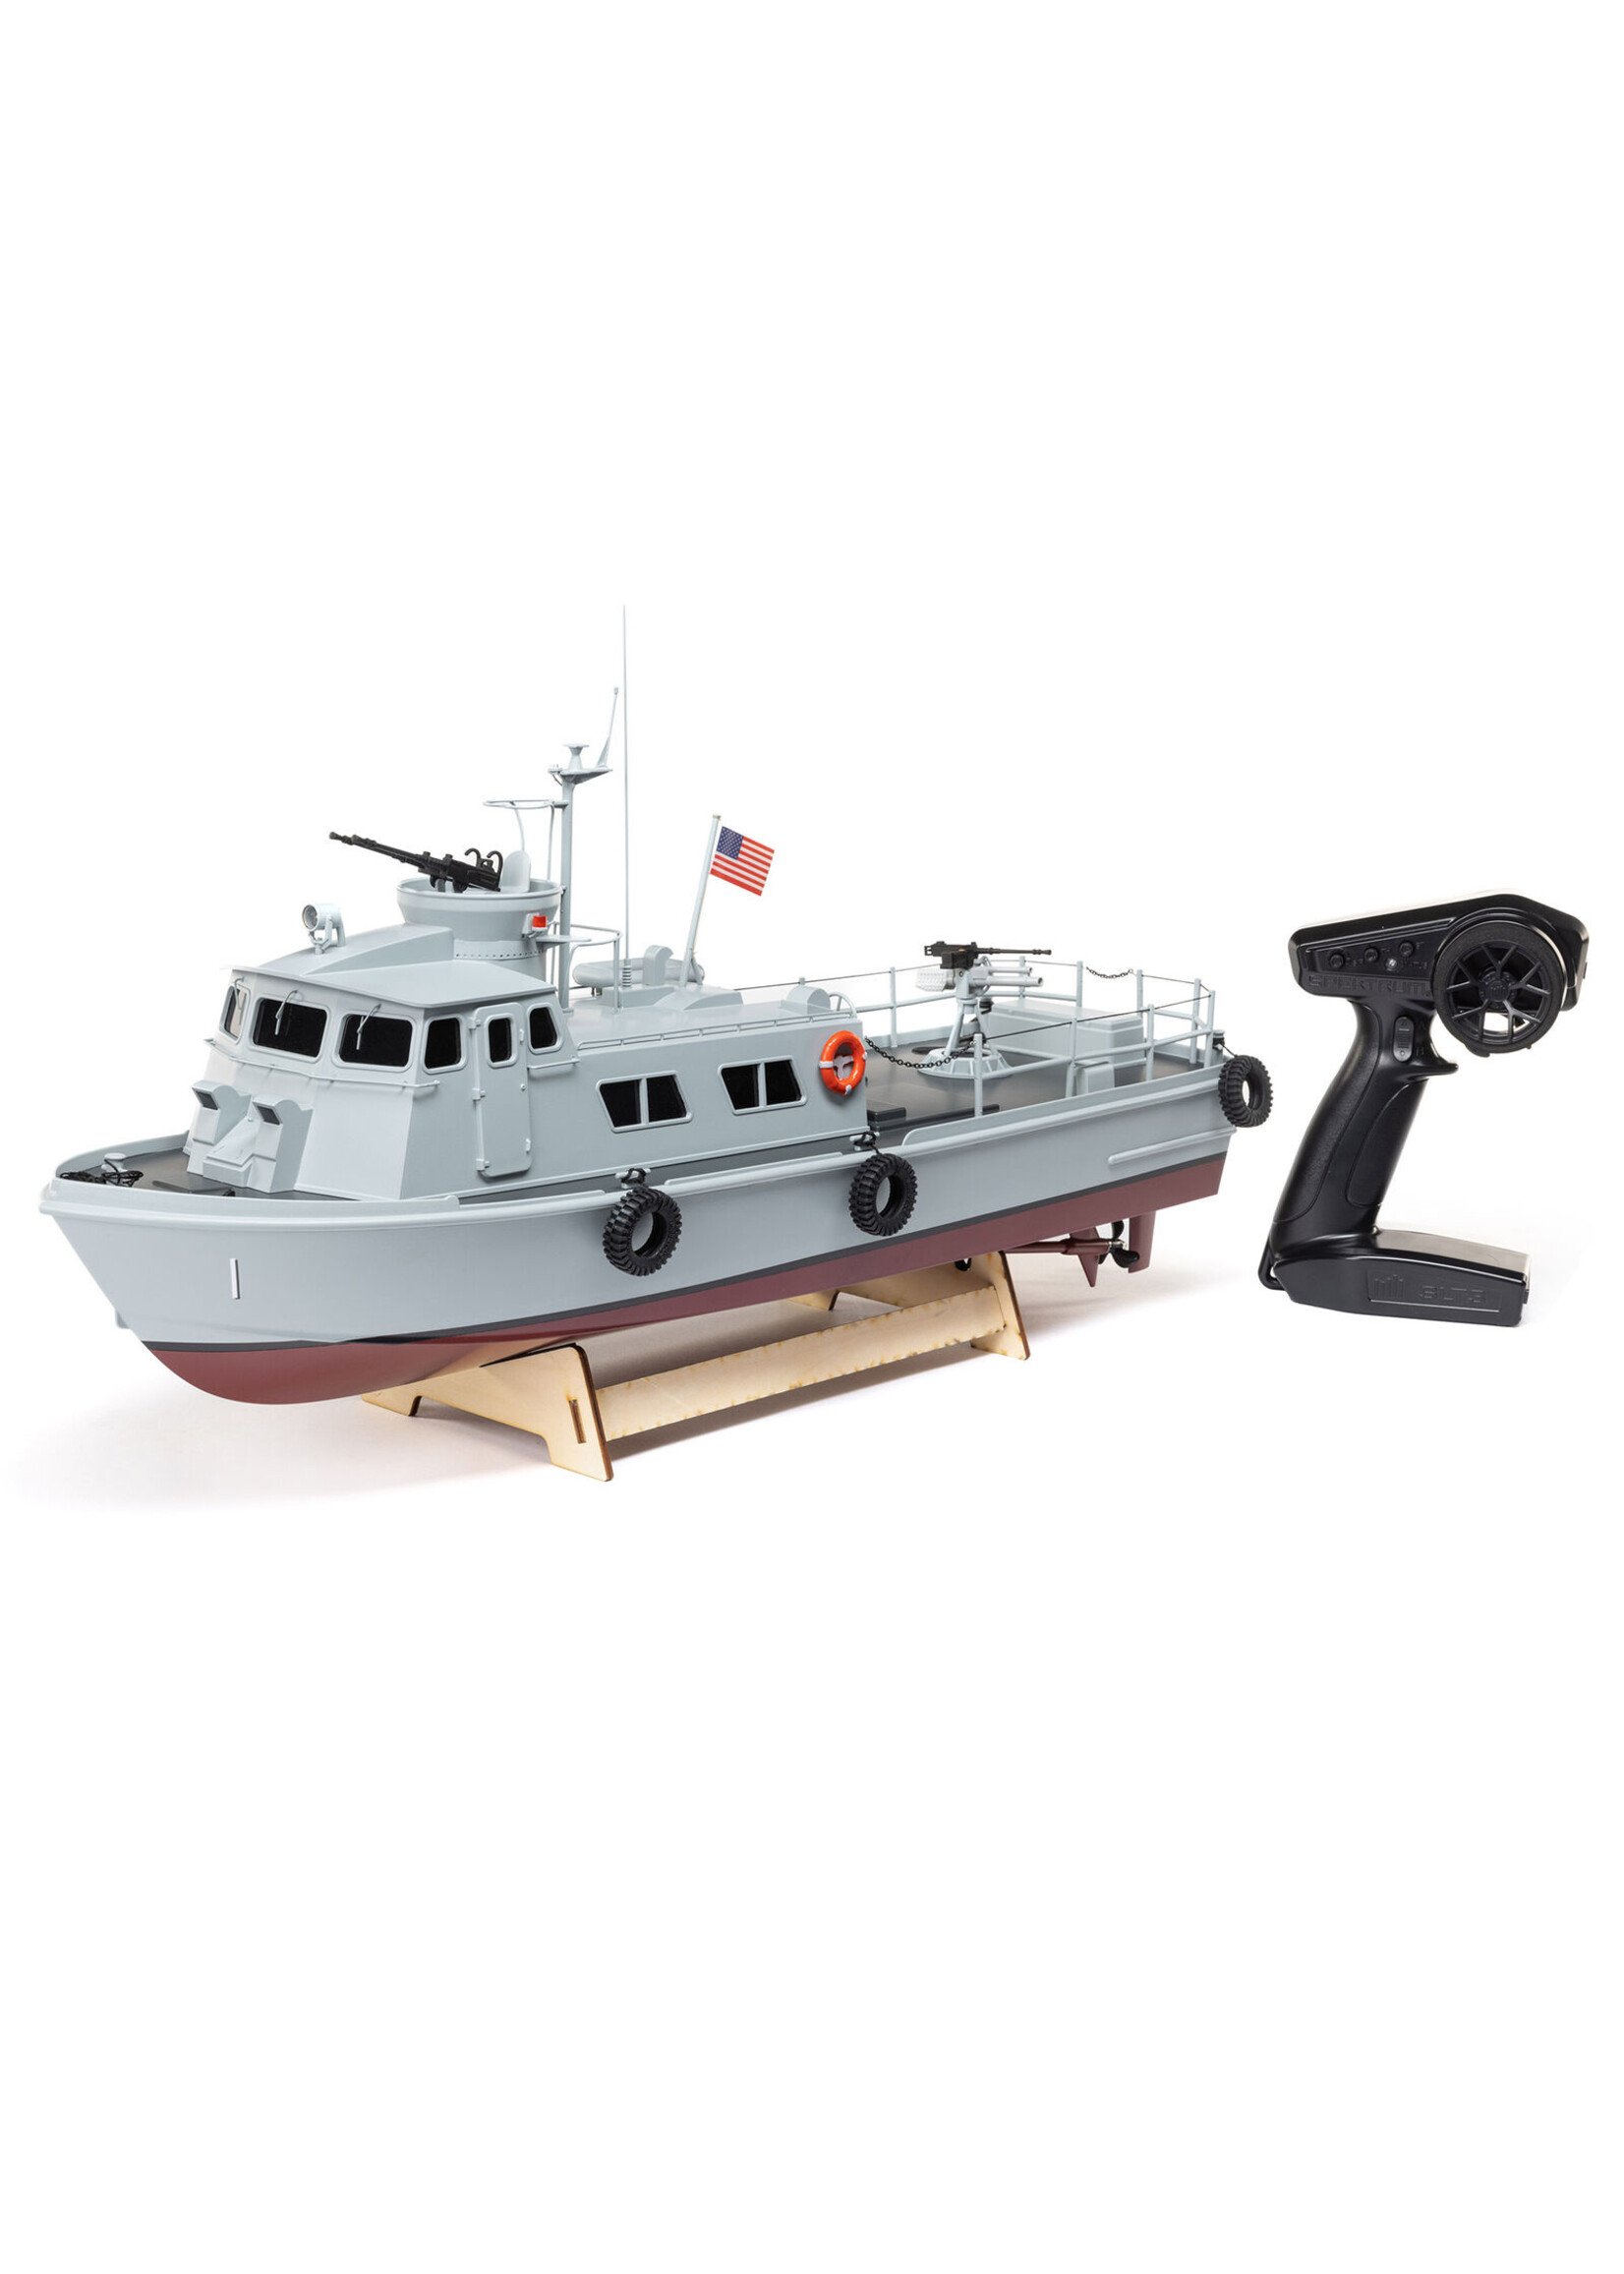 Pro Boat PCF Mark I 24" Swift Patrol Craft - RTR